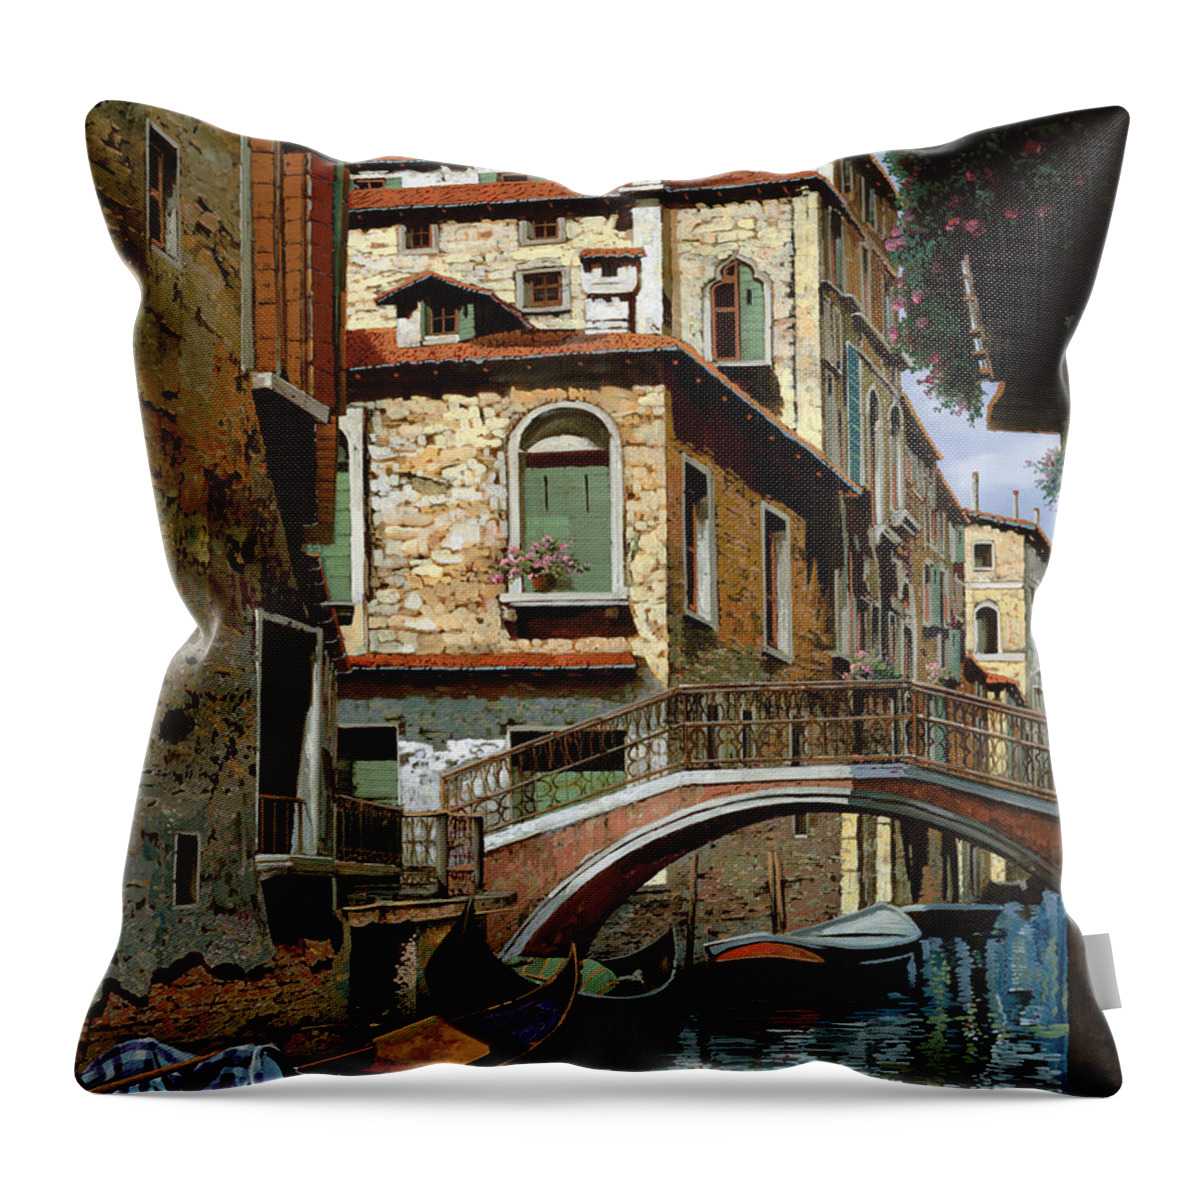 Venice Throw Pillow featuring the painting Rio Degli Squeri by Guido Borelli